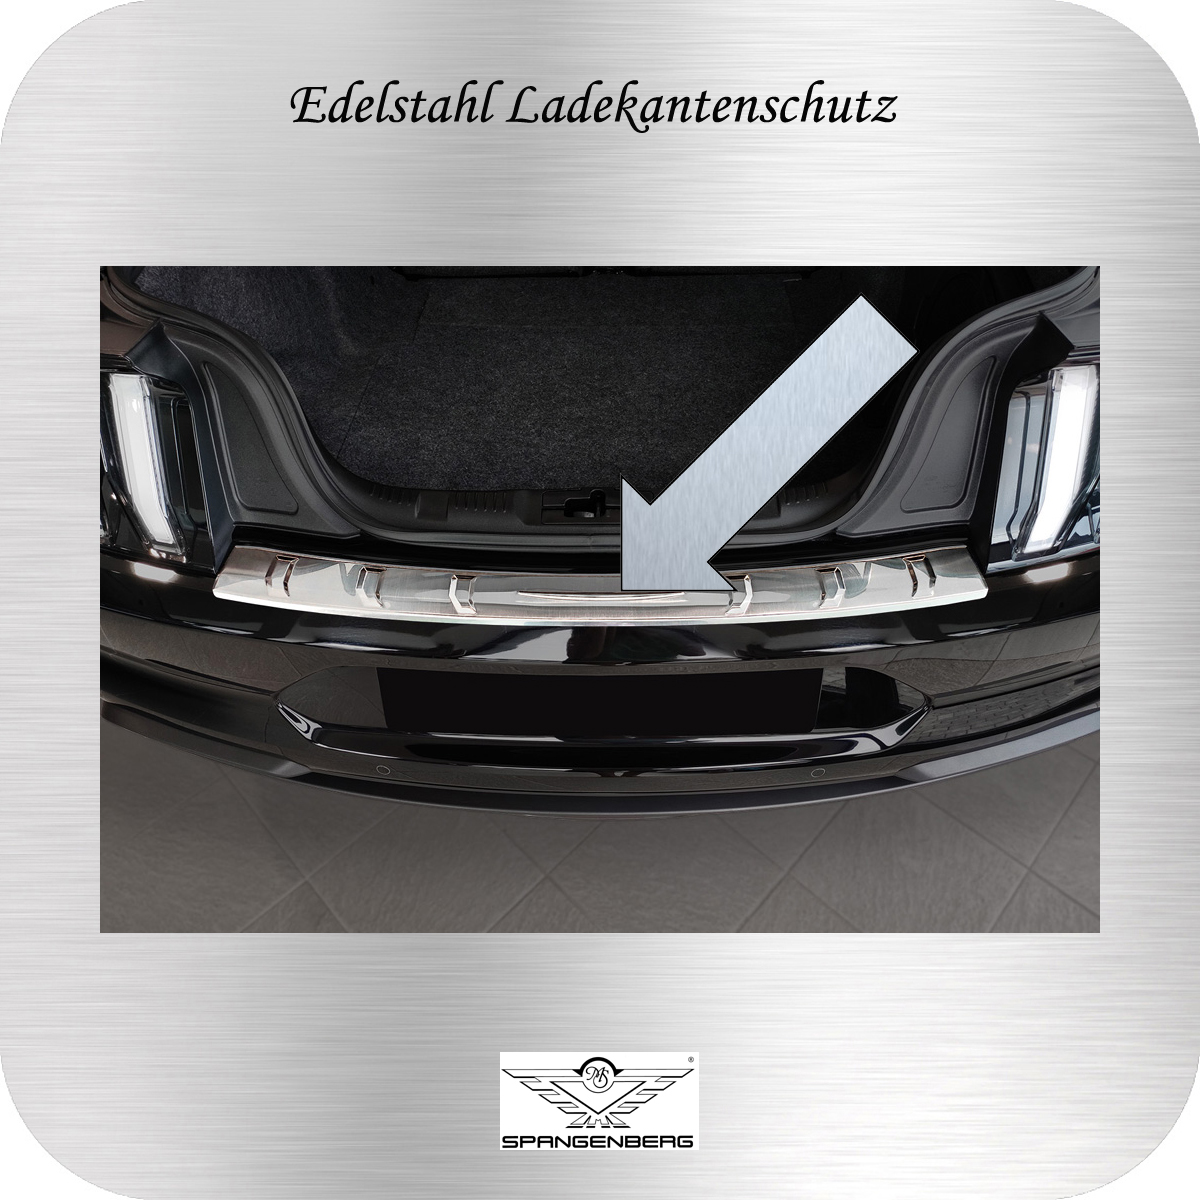 Ladekantenschutz Edelstahl für Ford Mustang Coupé VI Generation 05.2015- 3235909